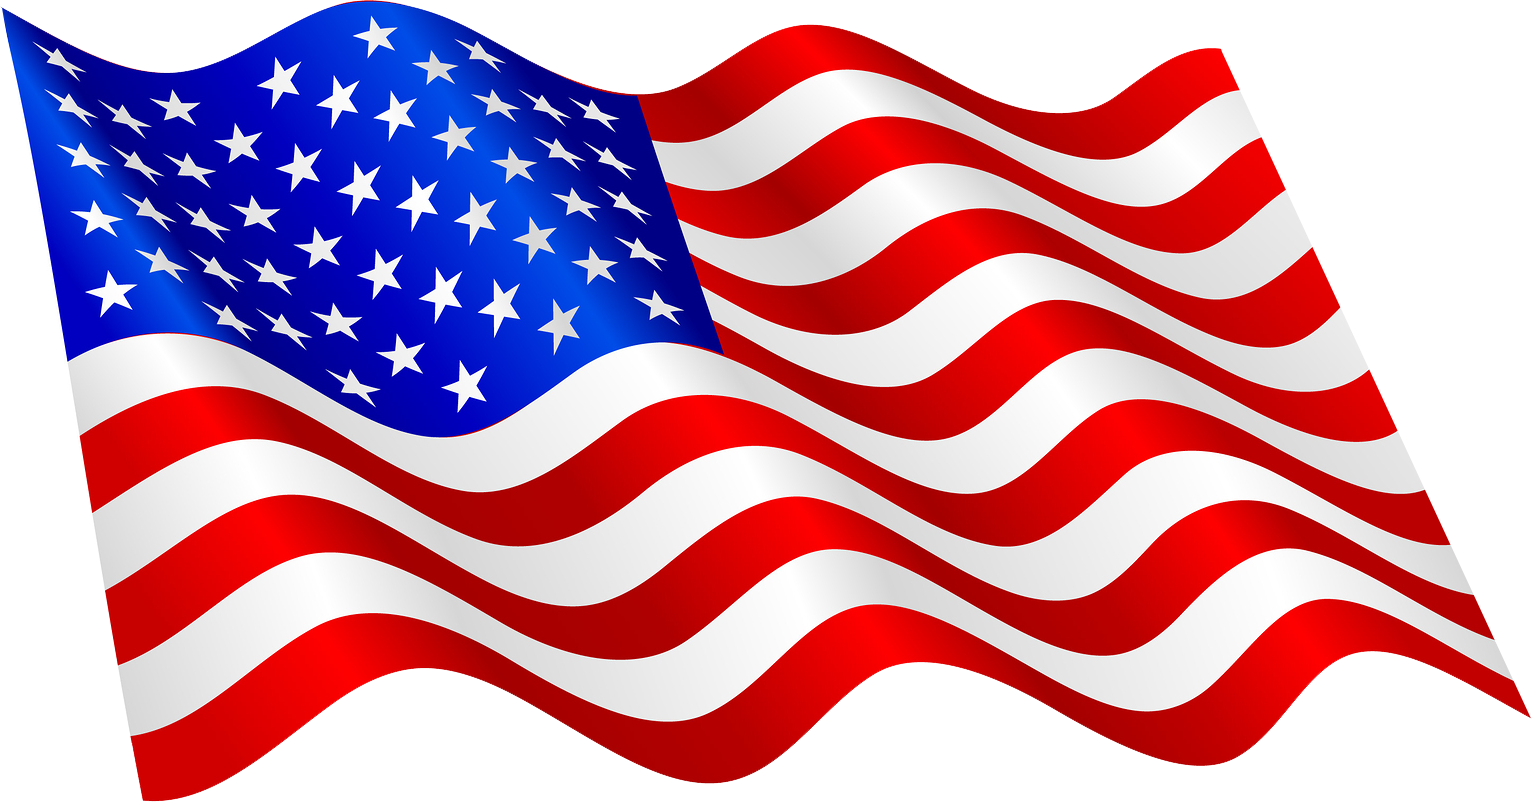 Amerikanische Flagge